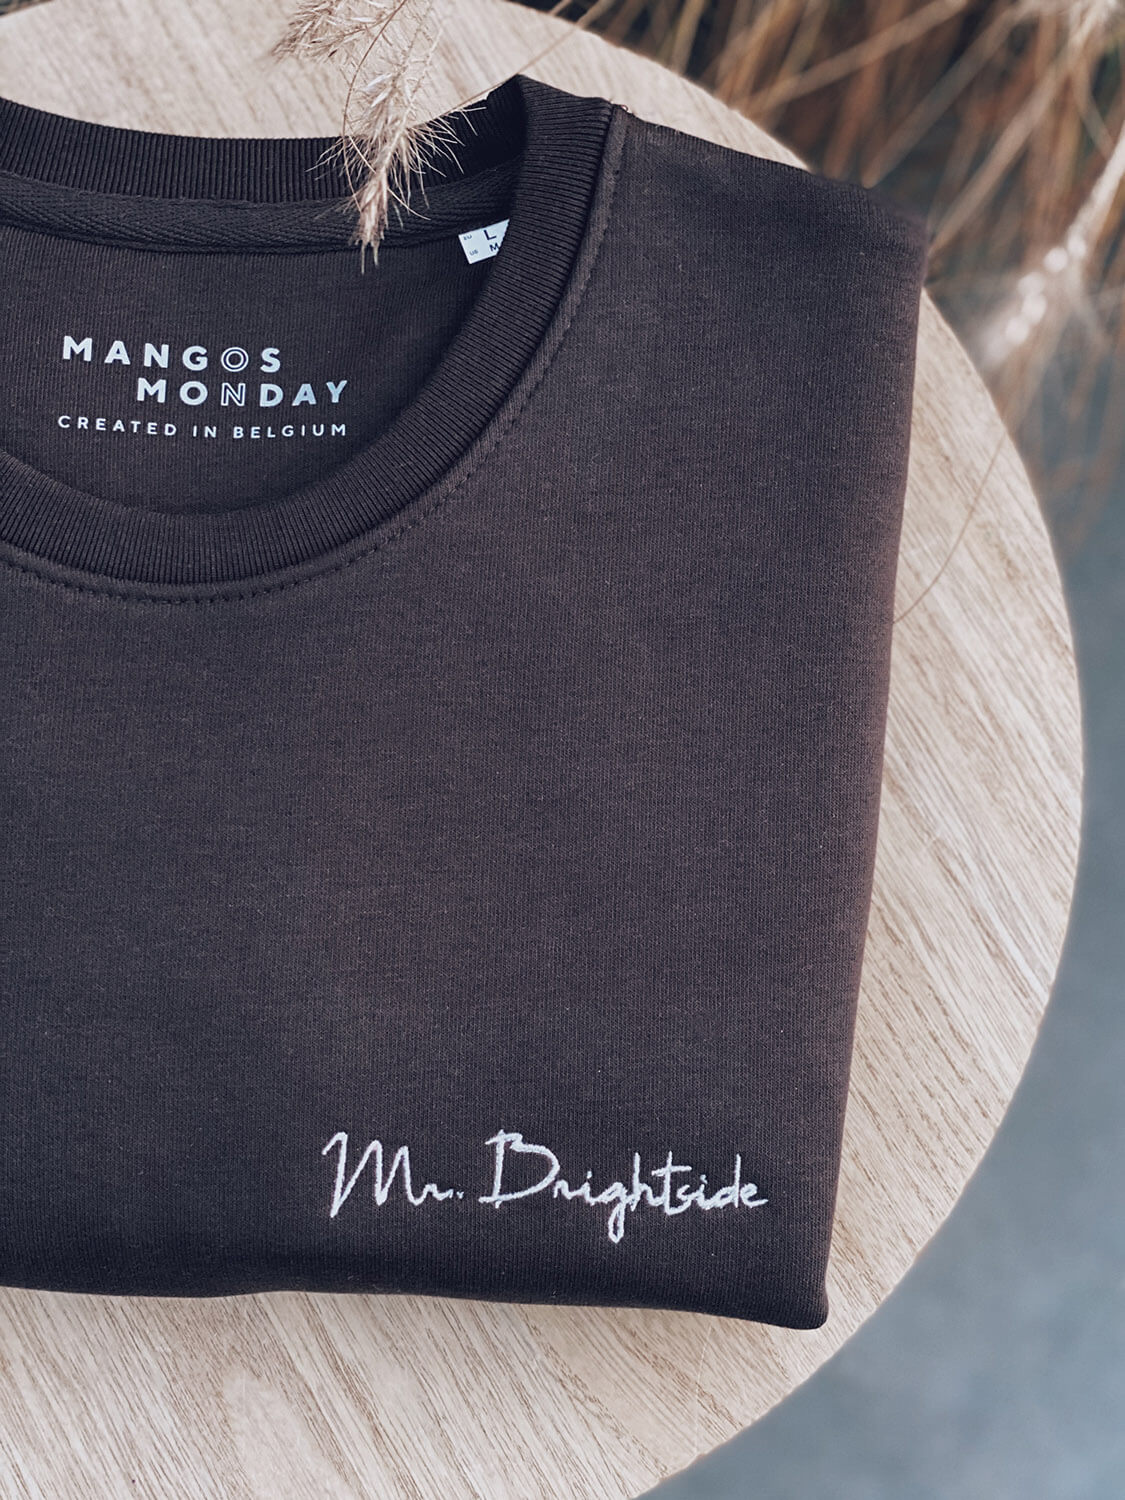 Mr. Brightside sweater by Mangos on Monday